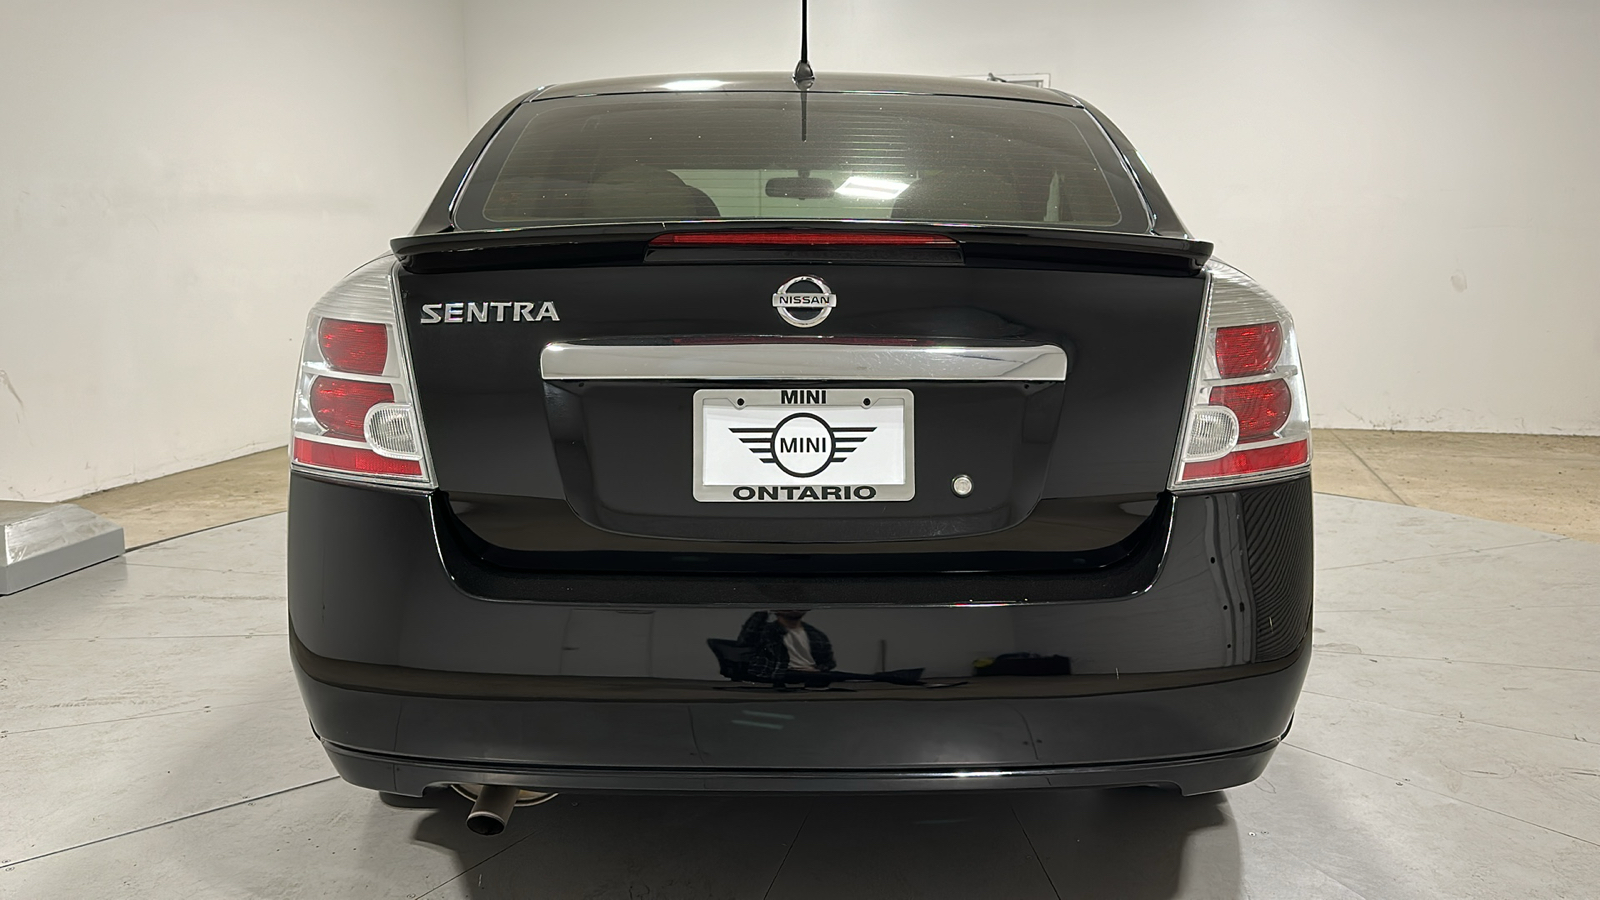 2011 Nissan Sentra 4dr Sedan I4 CVT 2.0 S 5